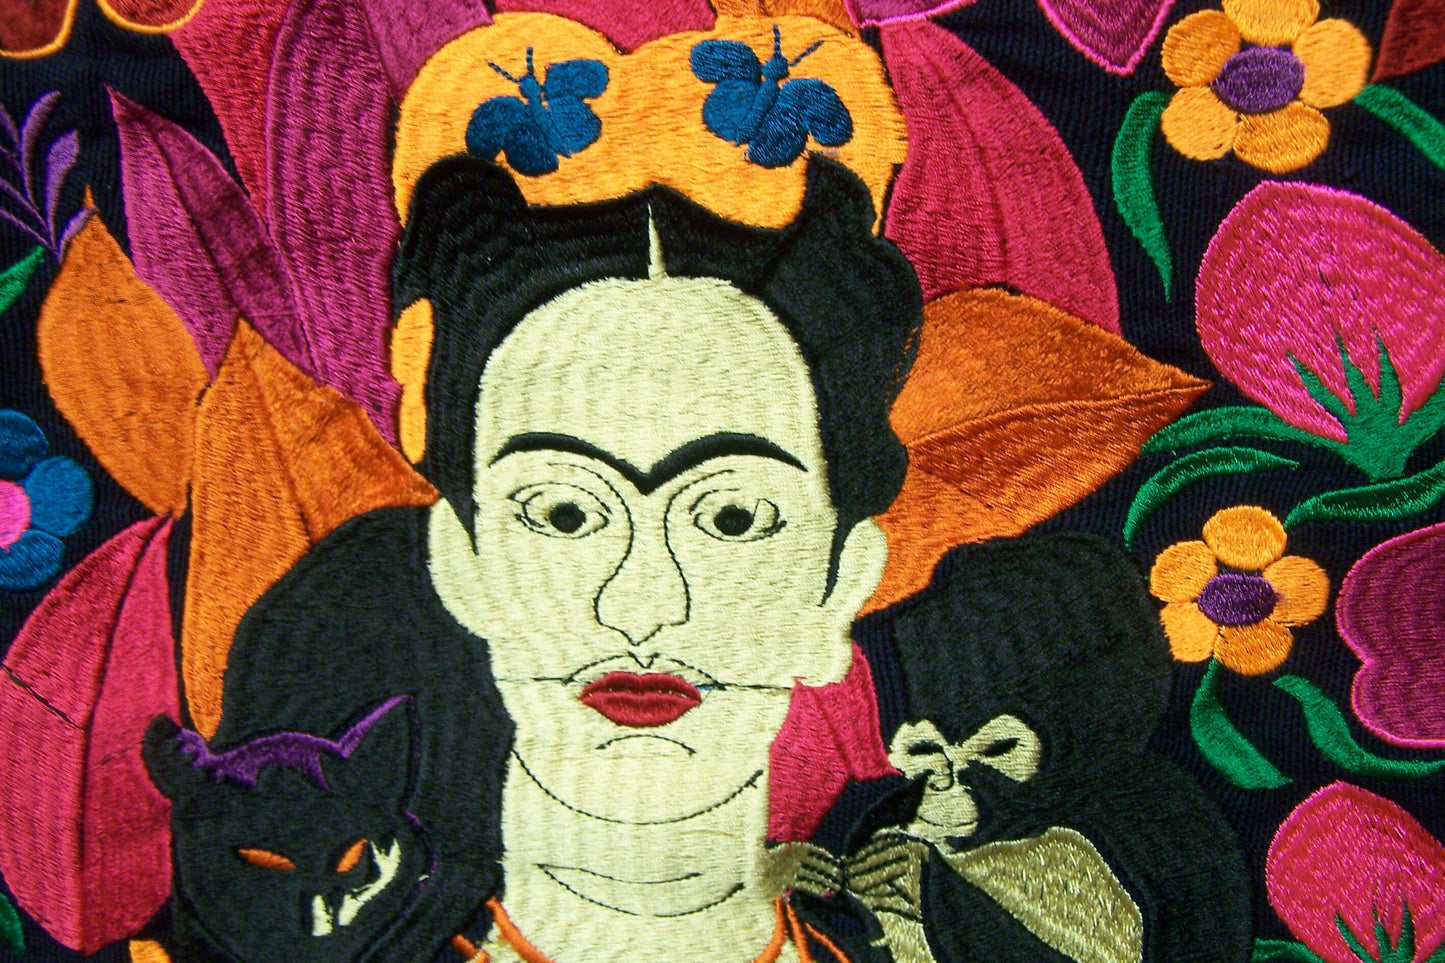 Frida! Large Embroidered Leather Shoulder Bag Purse, Lined Interior, 2 Zipper Pouches, Frida Kahlo - Black #1